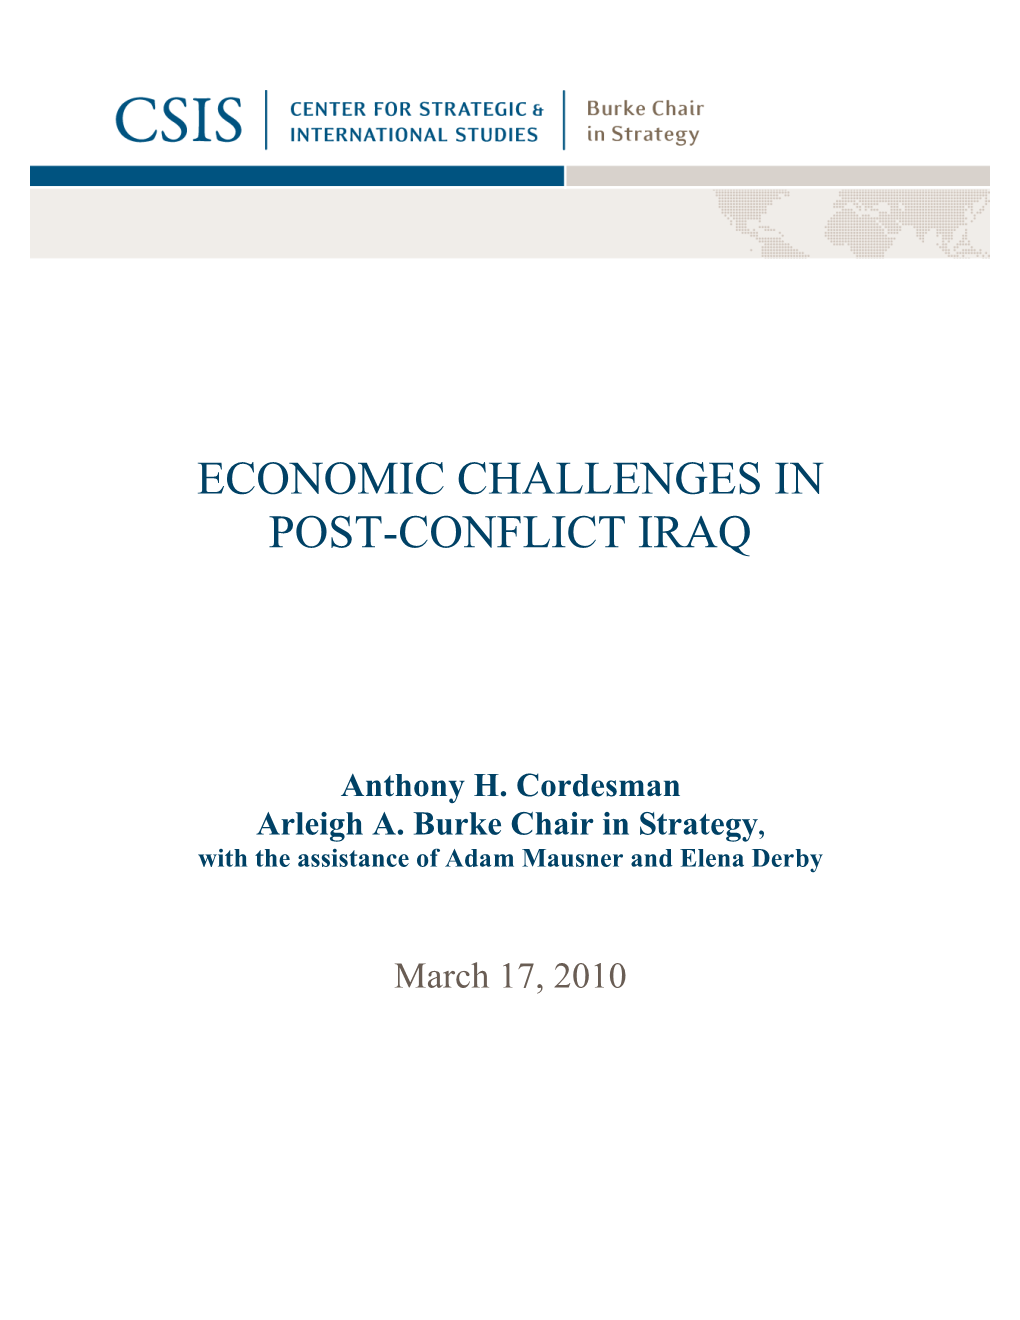 Economic Challenges in Post-Conflict Iraq